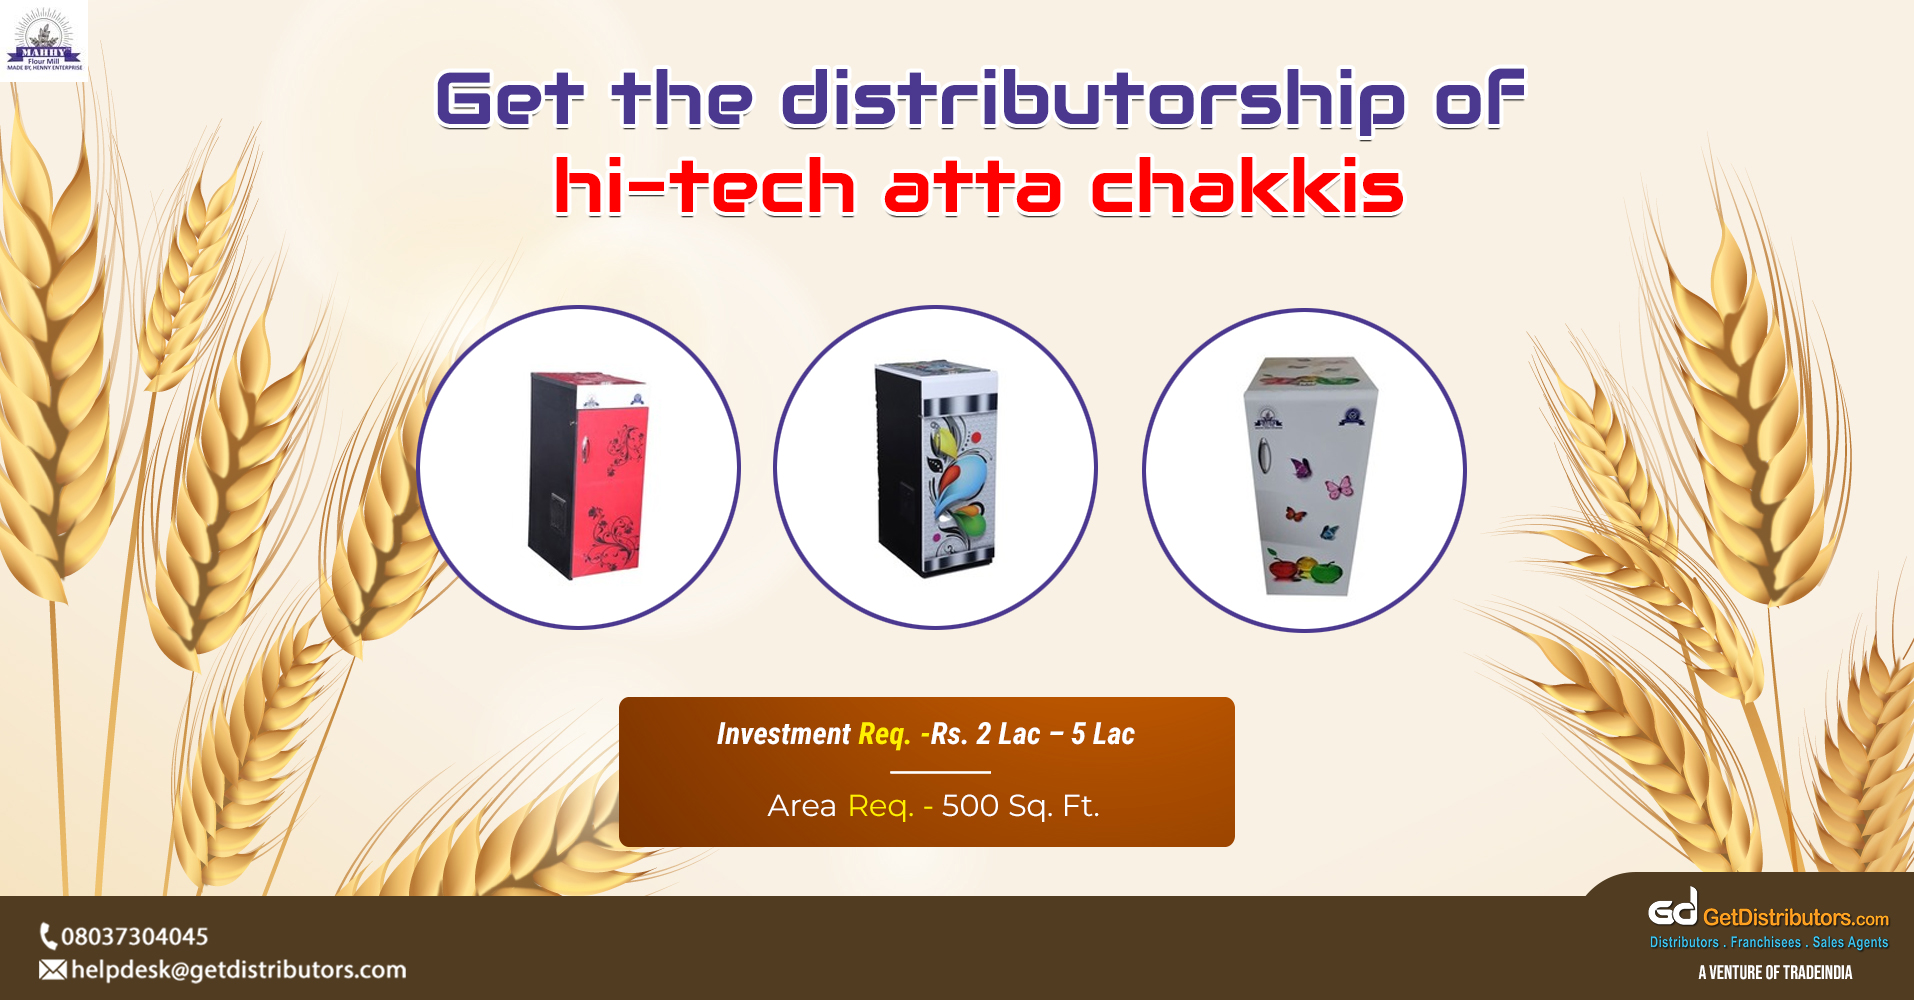 Distributorship of high performing atta-chakkis